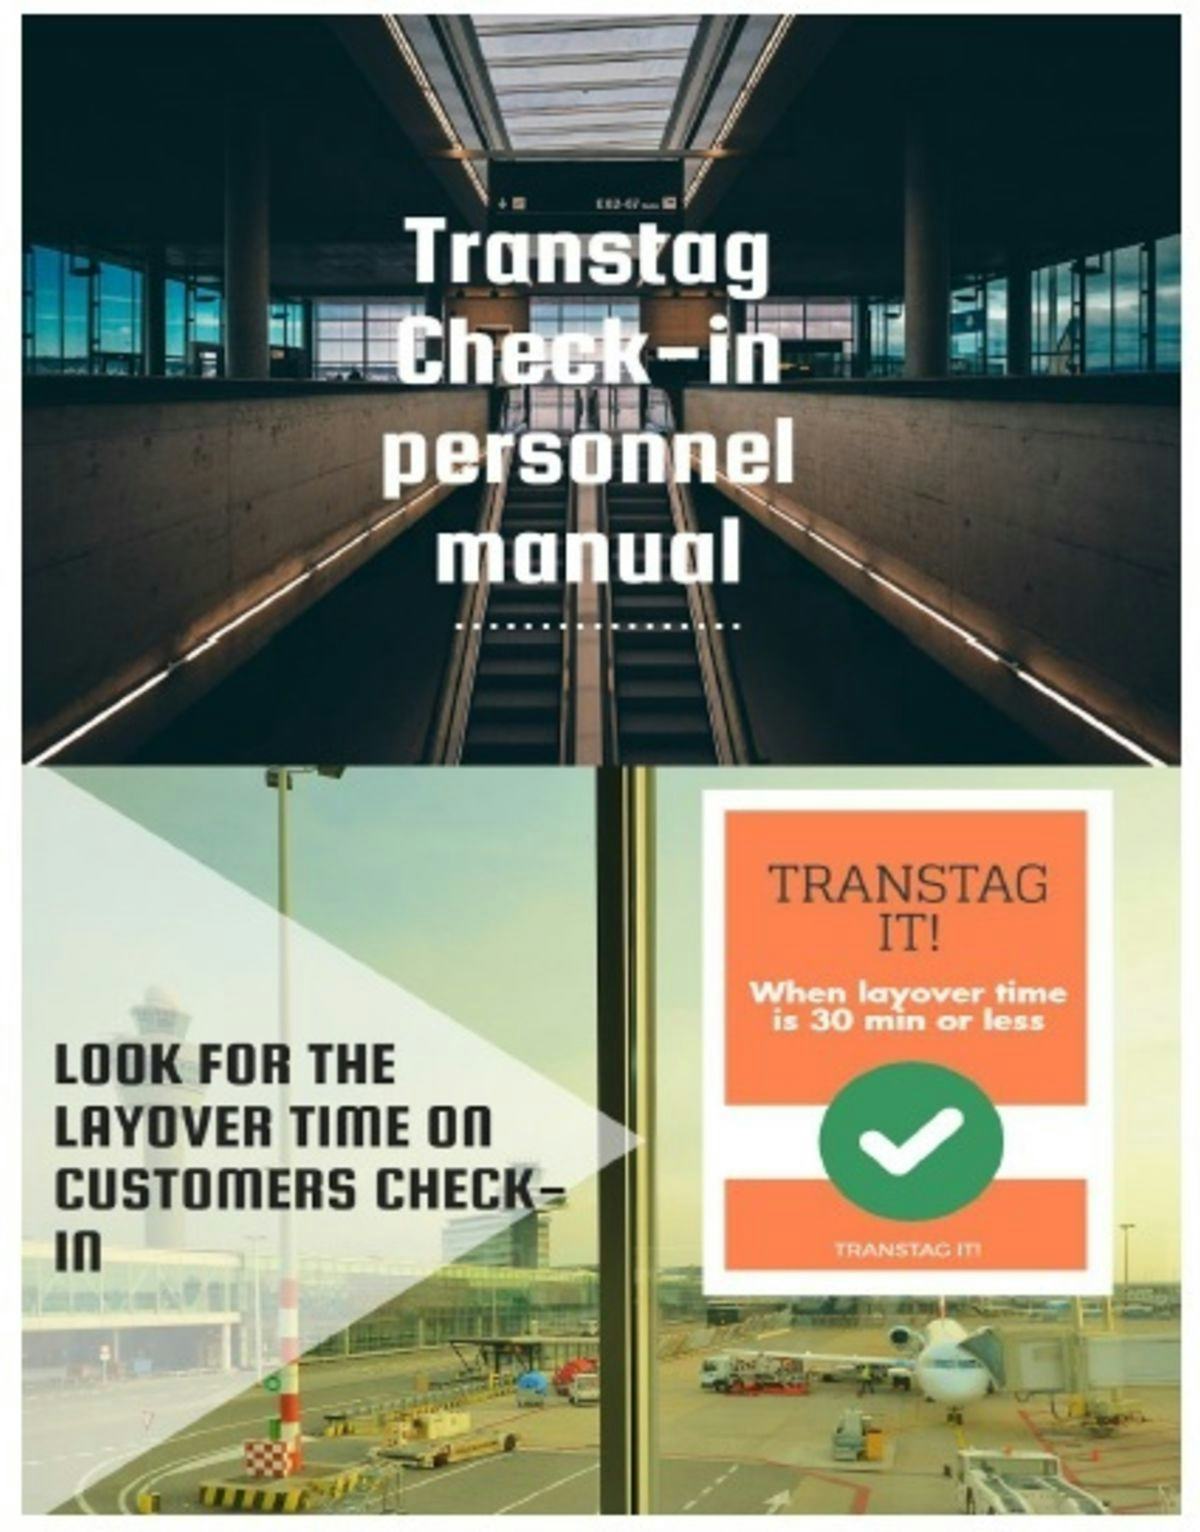 Transtag personnel manual